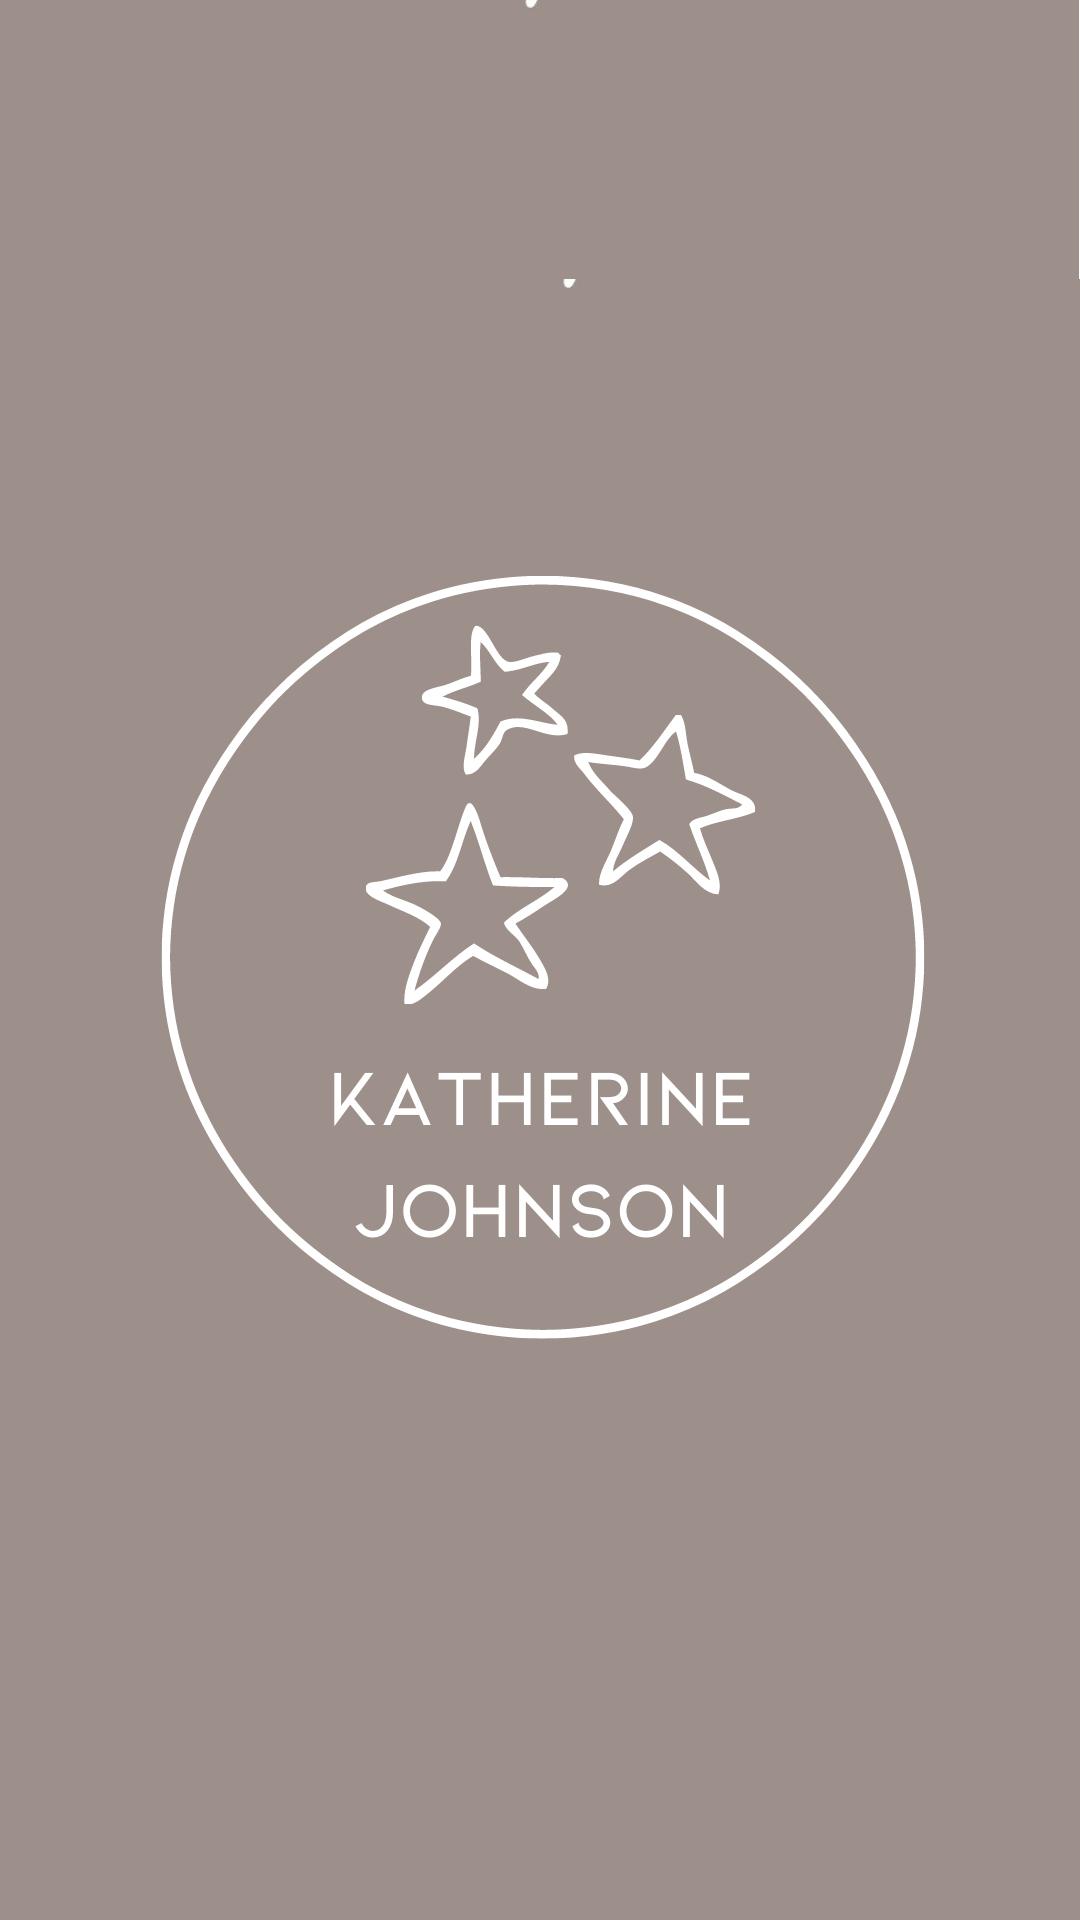 Katherine Johnson Letter - Mathematician